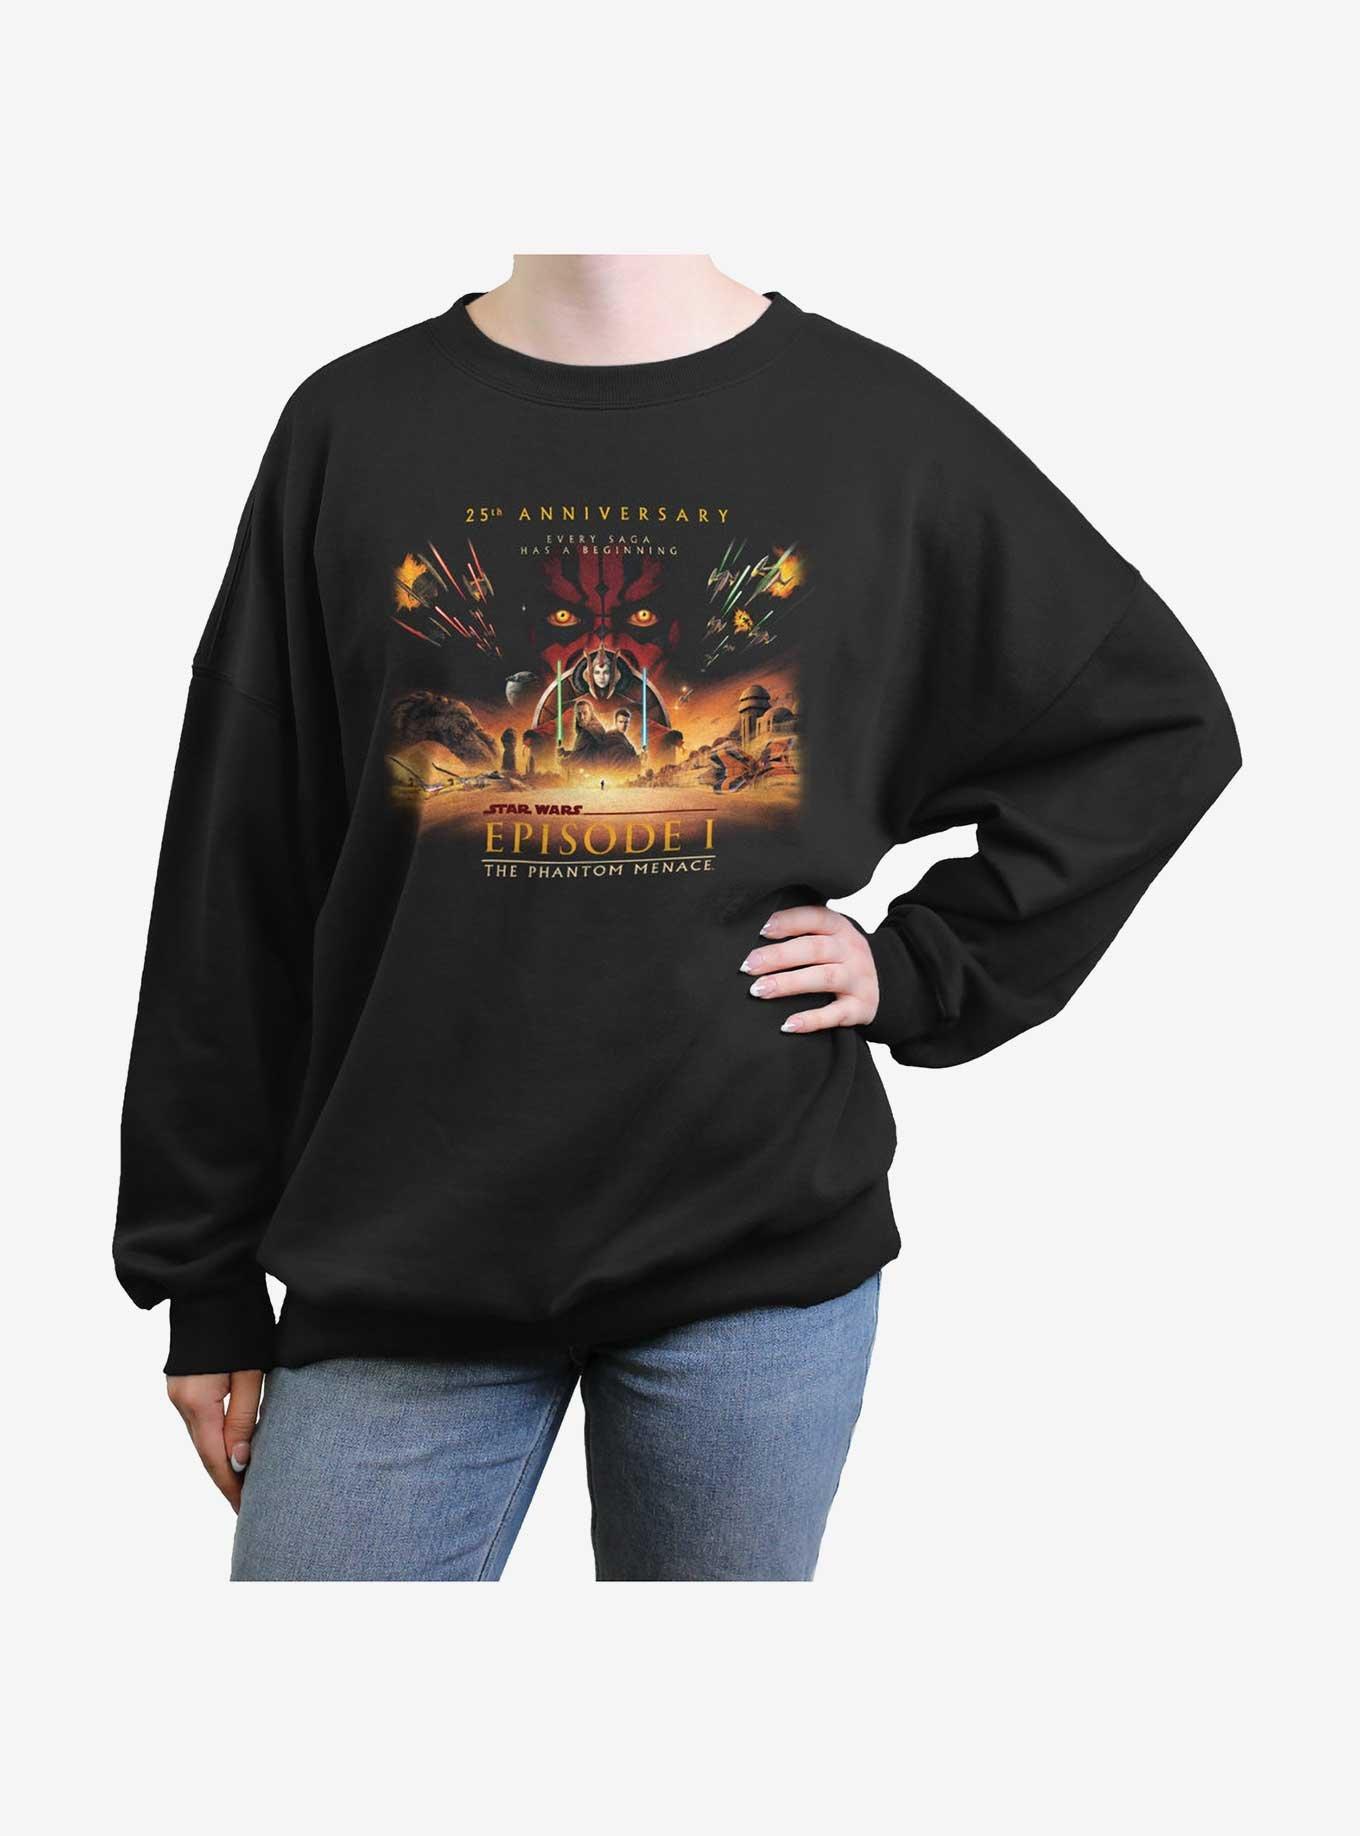 Star Wars Episode I: The Phantom Menace Wide 25th Anniversary Poster Girls Oversized Sweatshirt